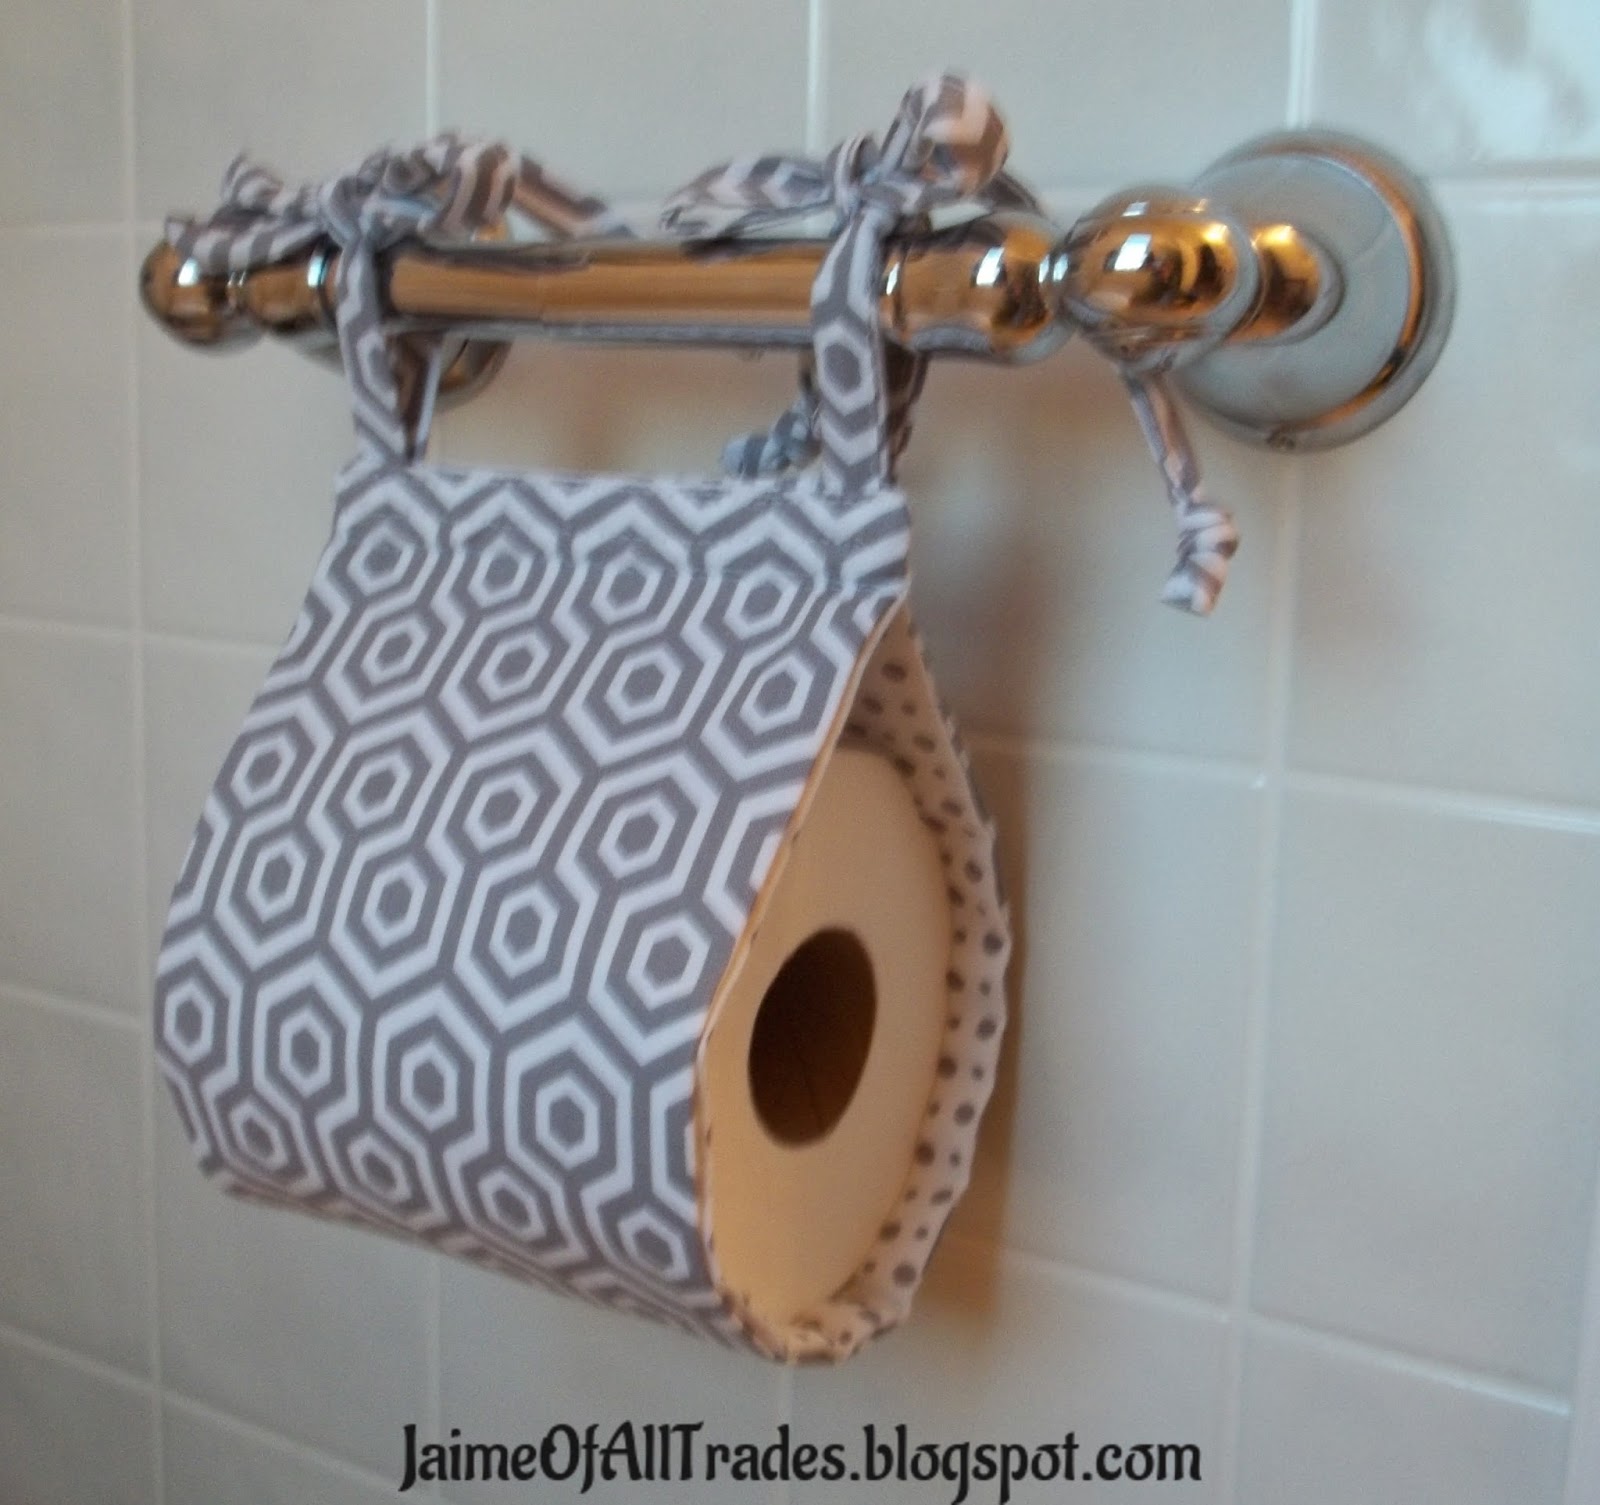 DIY Fabric Toilet Paper Holder